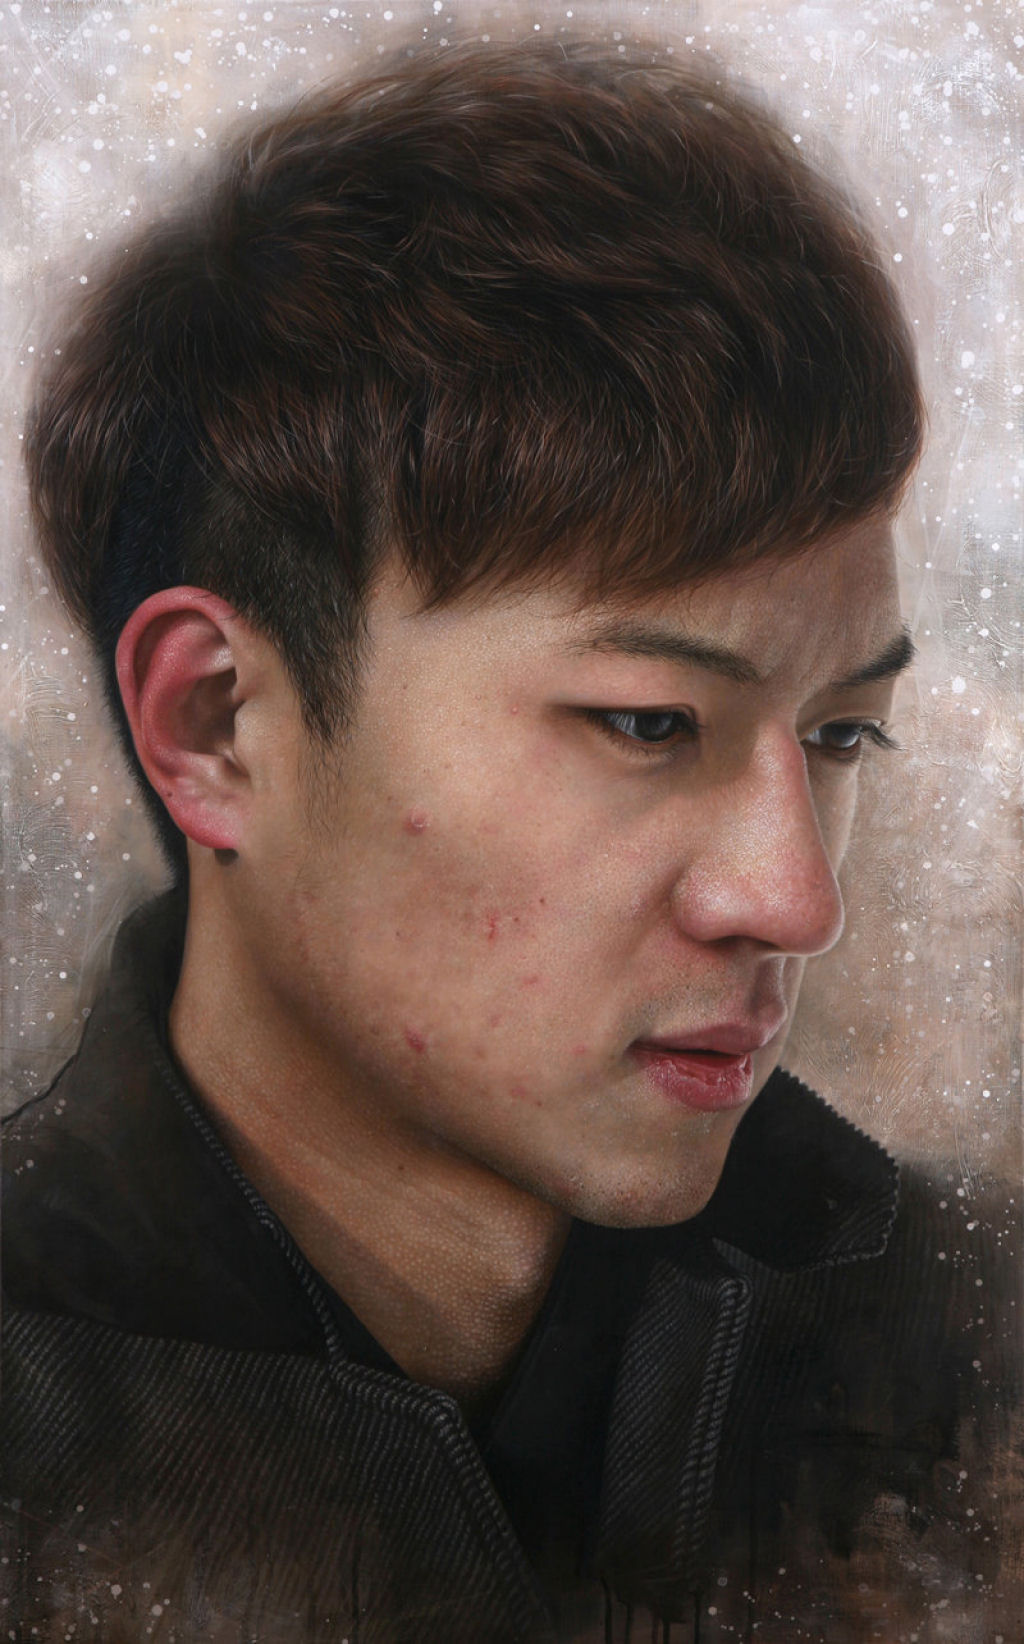 Os retratos hiperrealistas com pintura acrílica de Joongwon Jeong 07